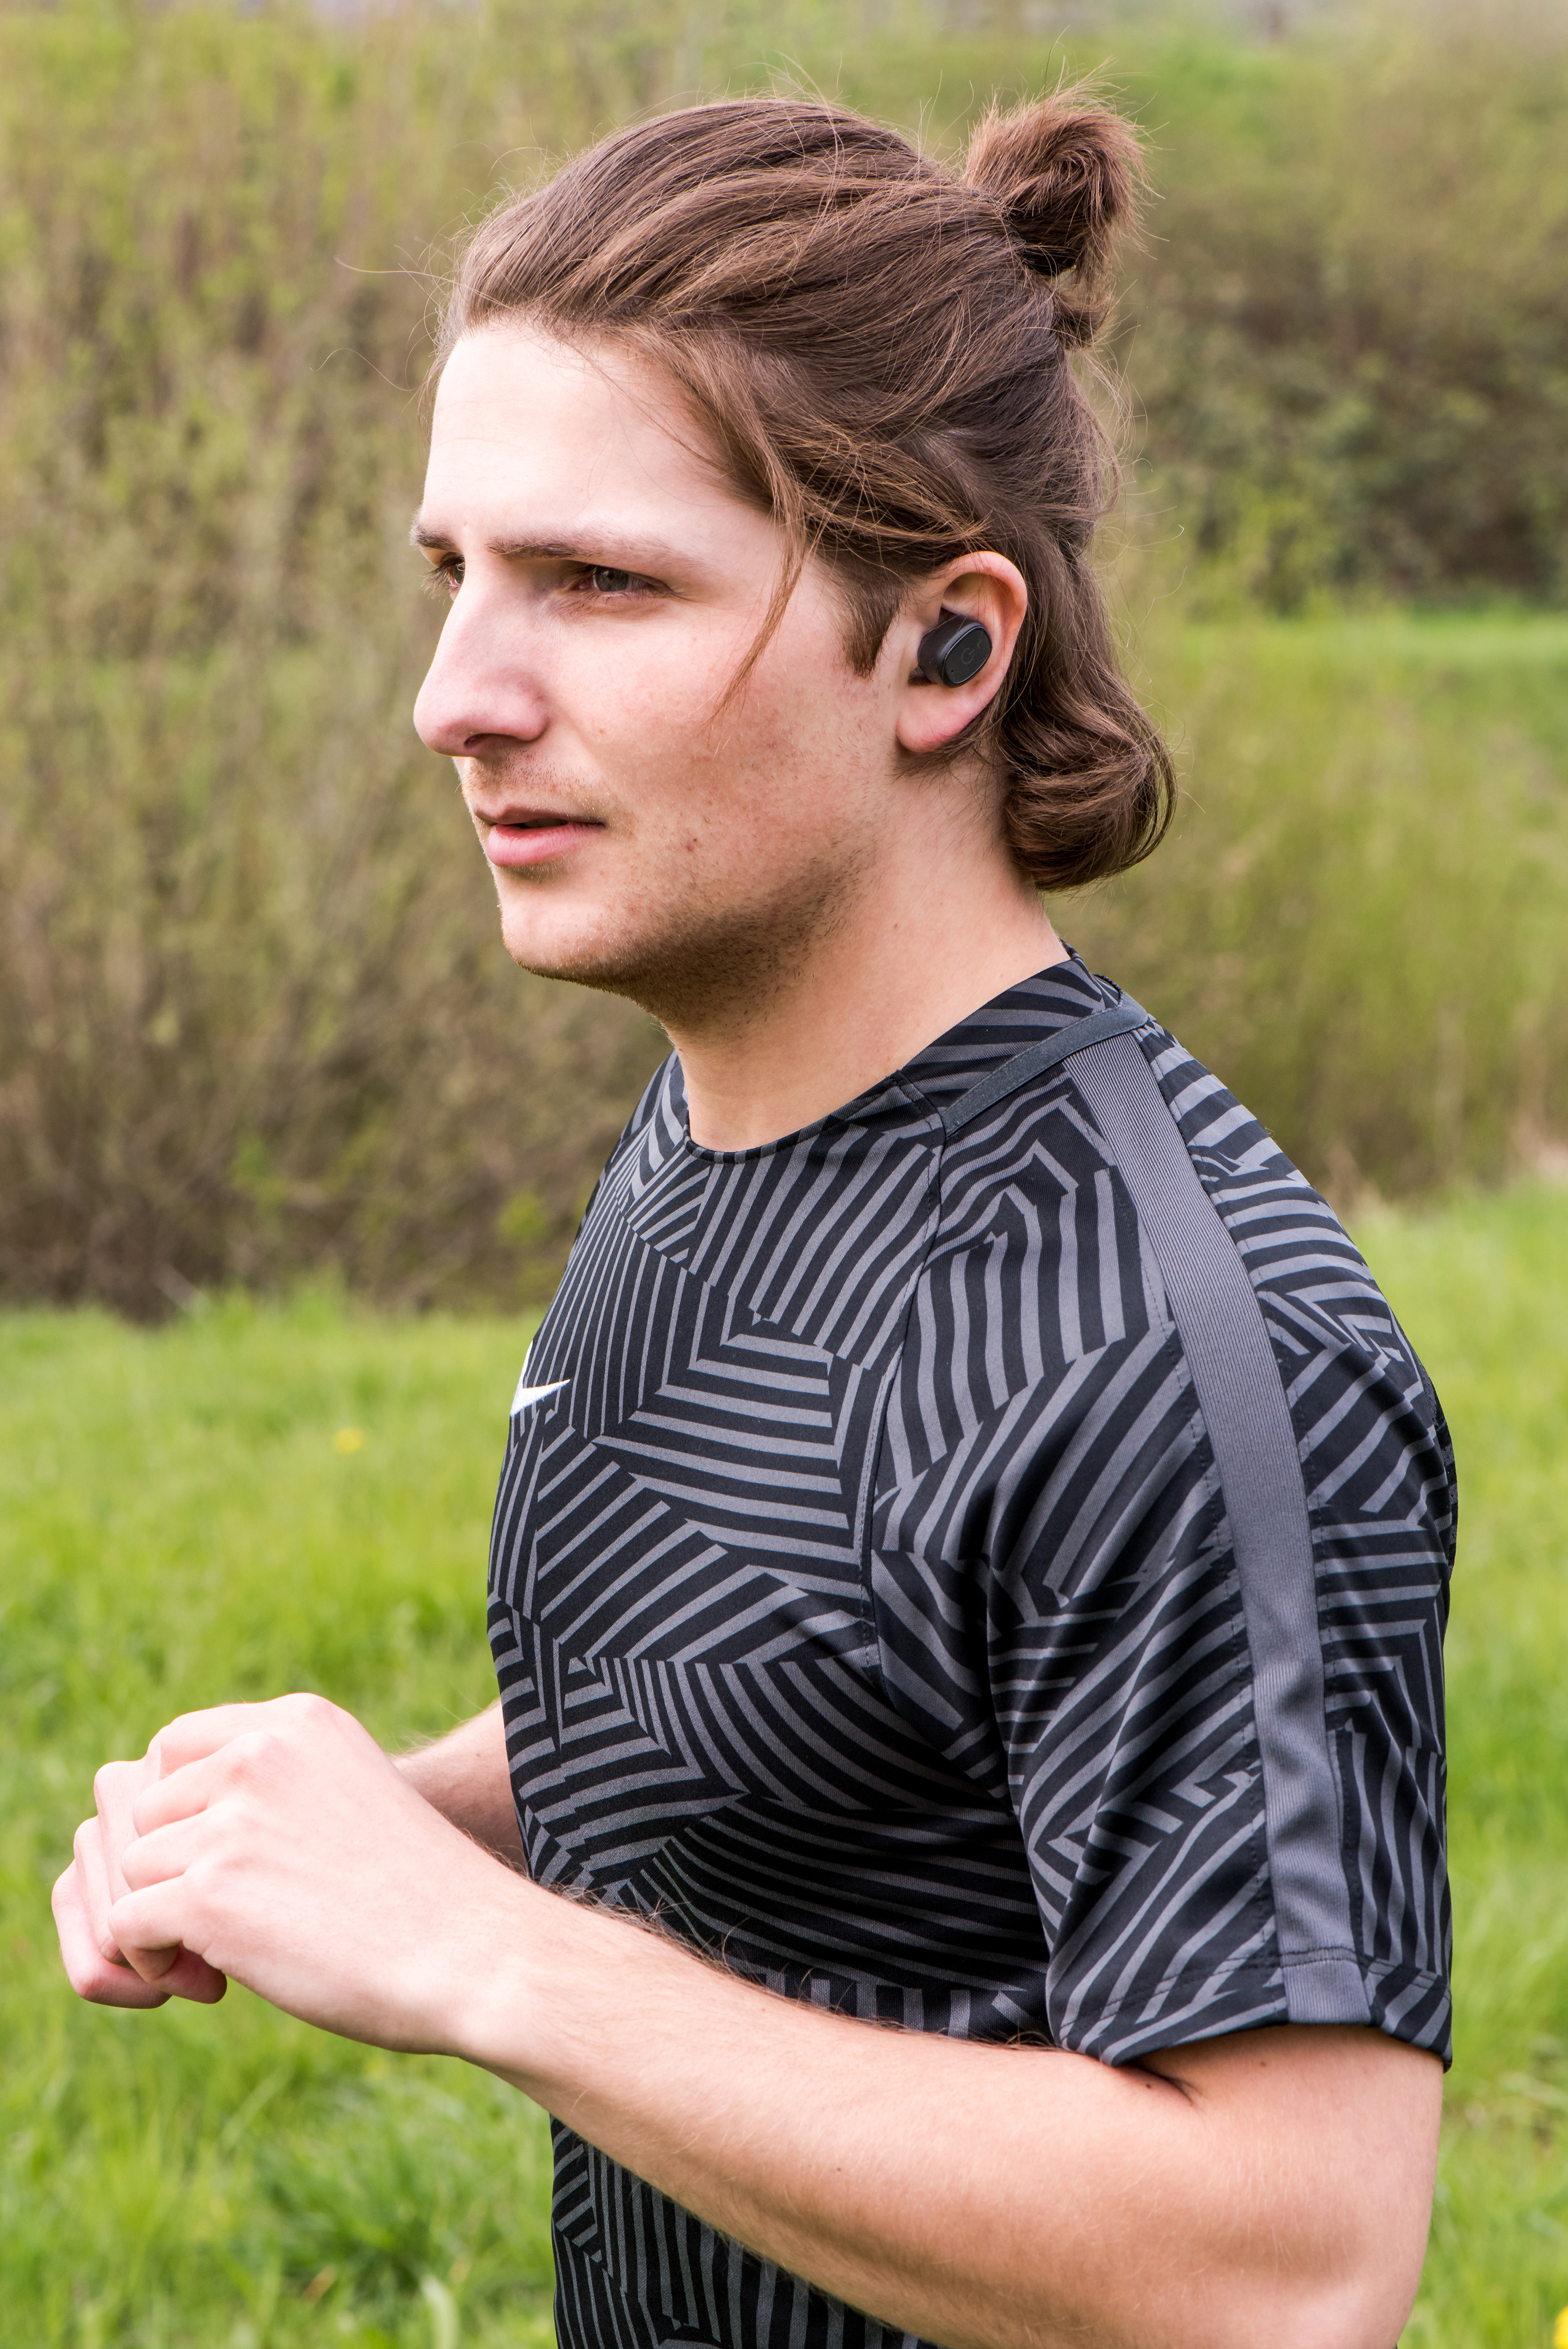 LENCO EPB-440BK, In-ear Headphone Bluetooth Schwarz Bluetooth